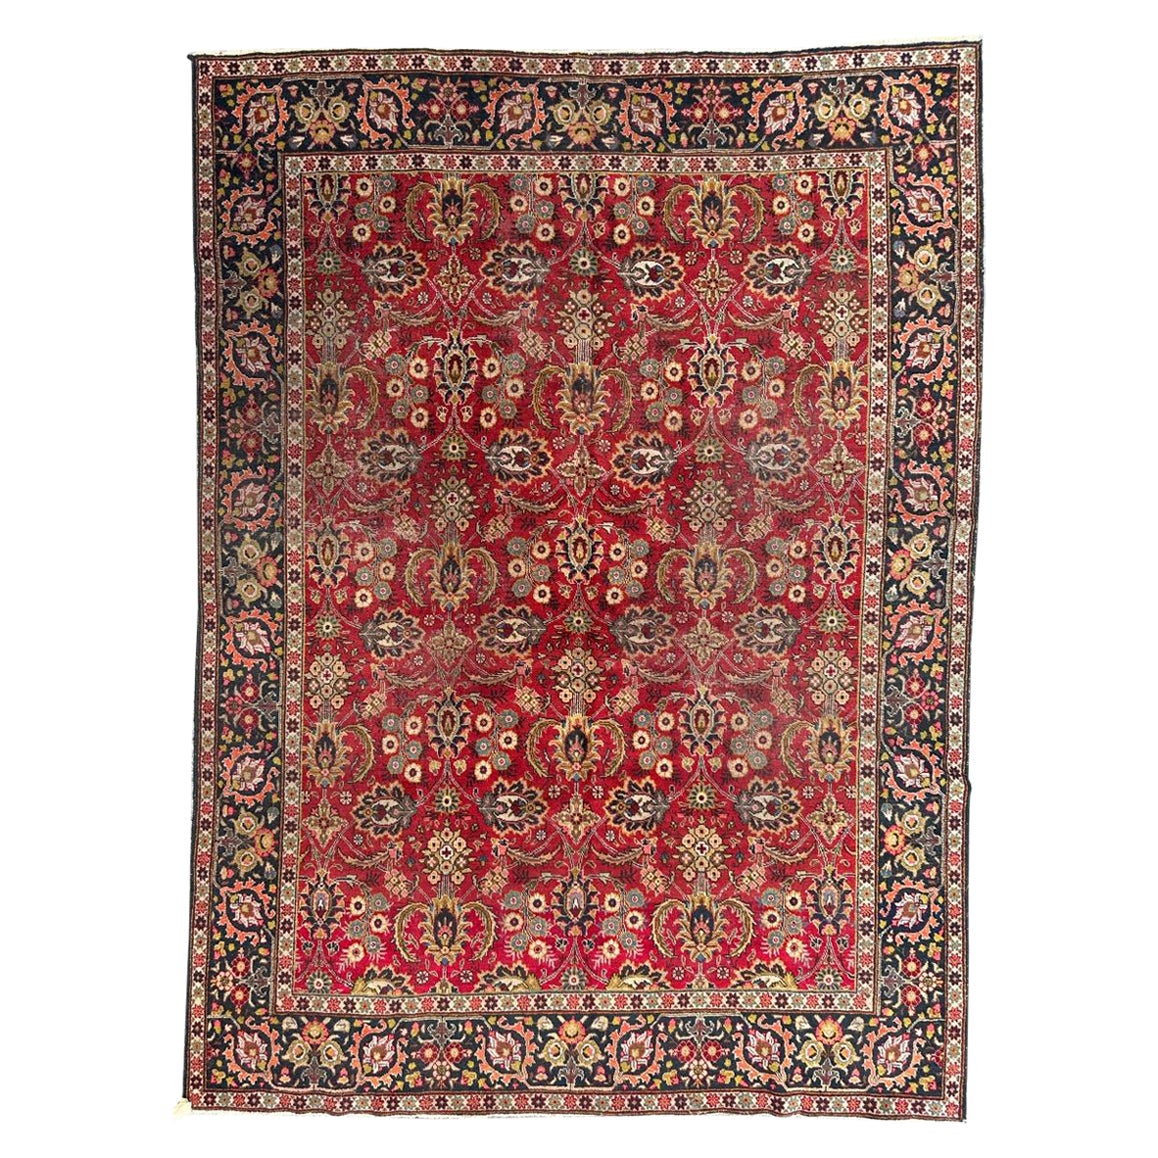 Bobyrug’s Nice early 20th century tabriz rug For Sale